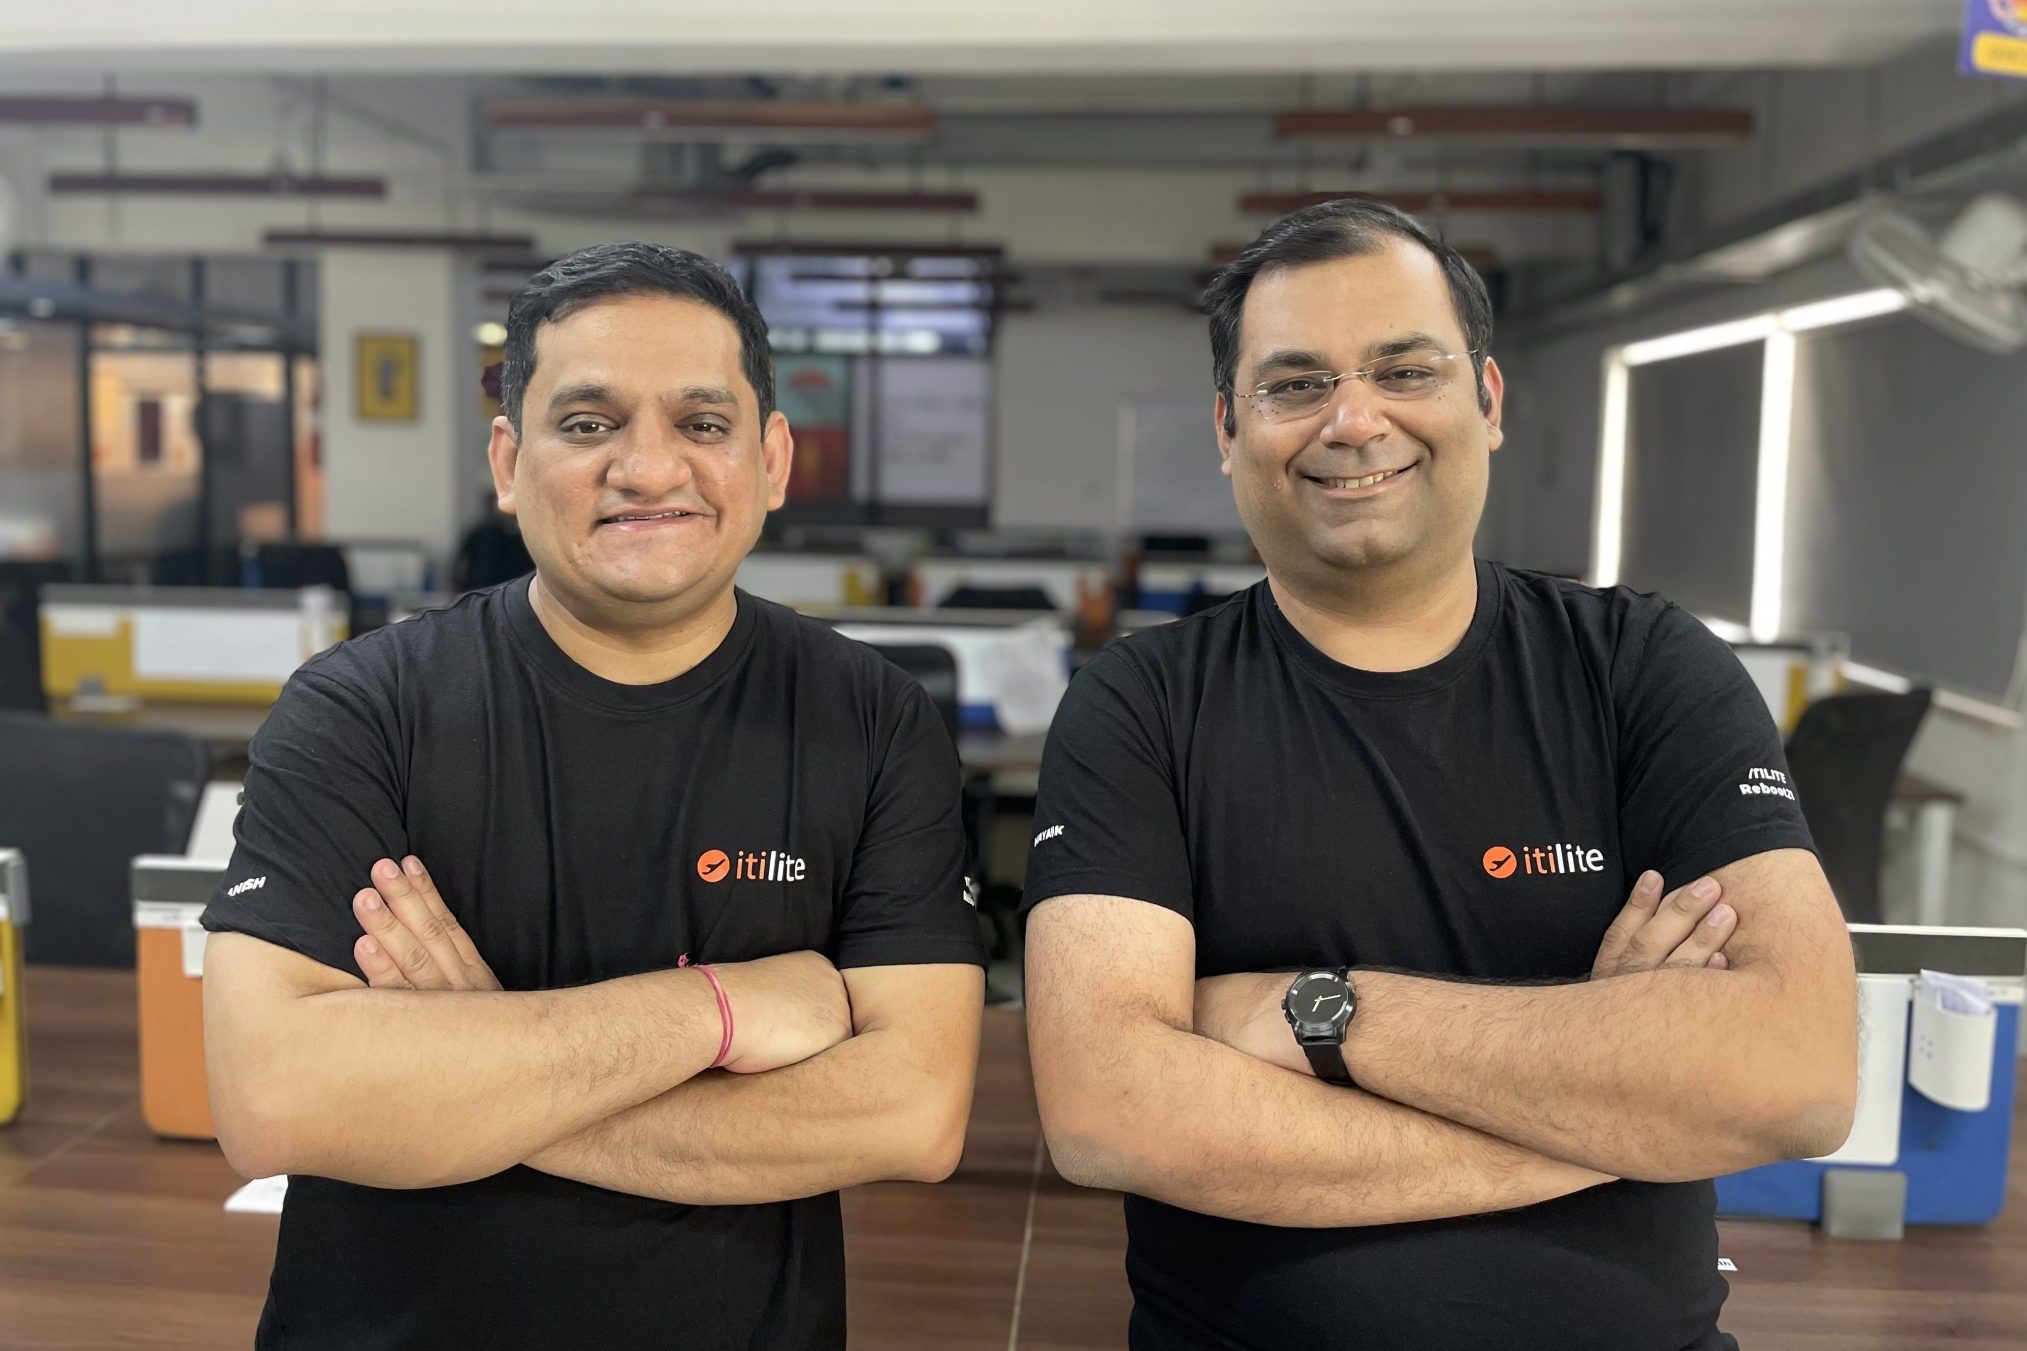 Itilite co-founders Anish Khadiya and Mayank Kukreja.